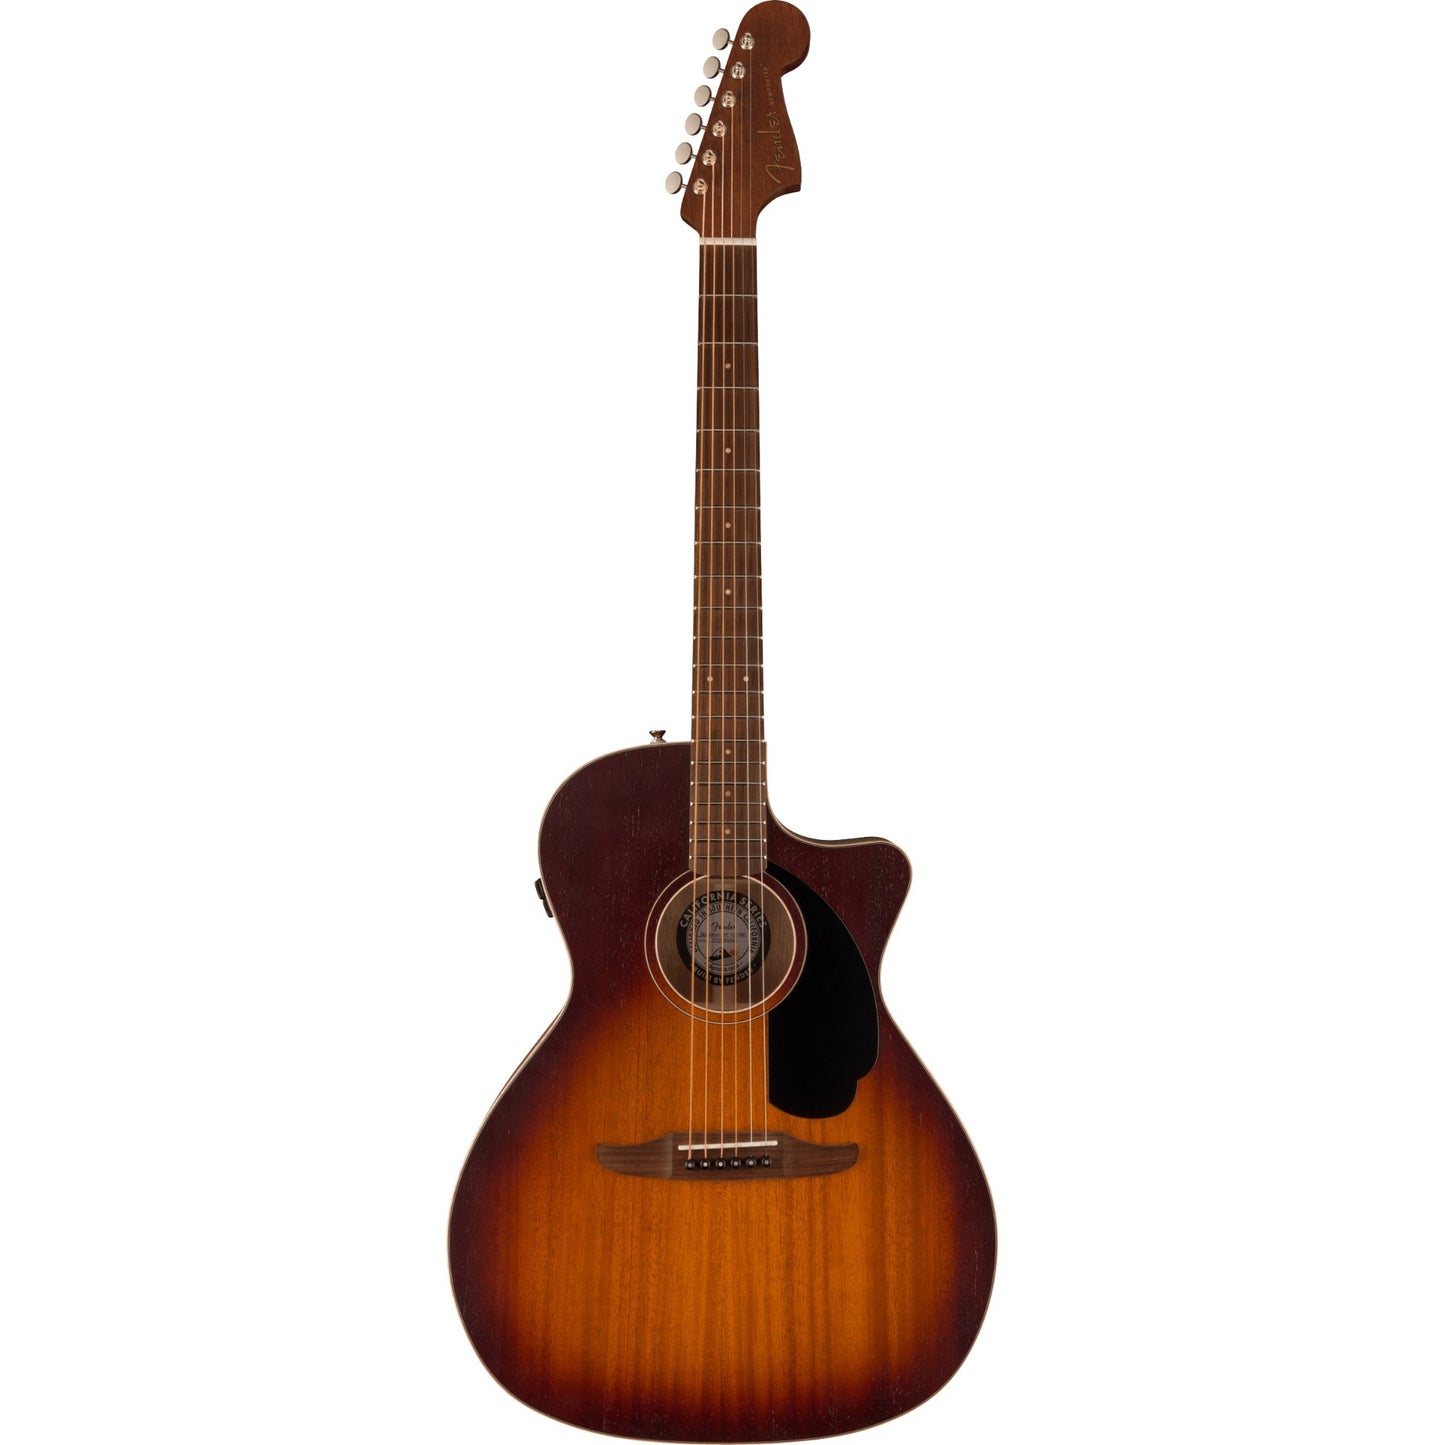 Fender Newporter Special Acoustic Electric Guitar - Honey Burst